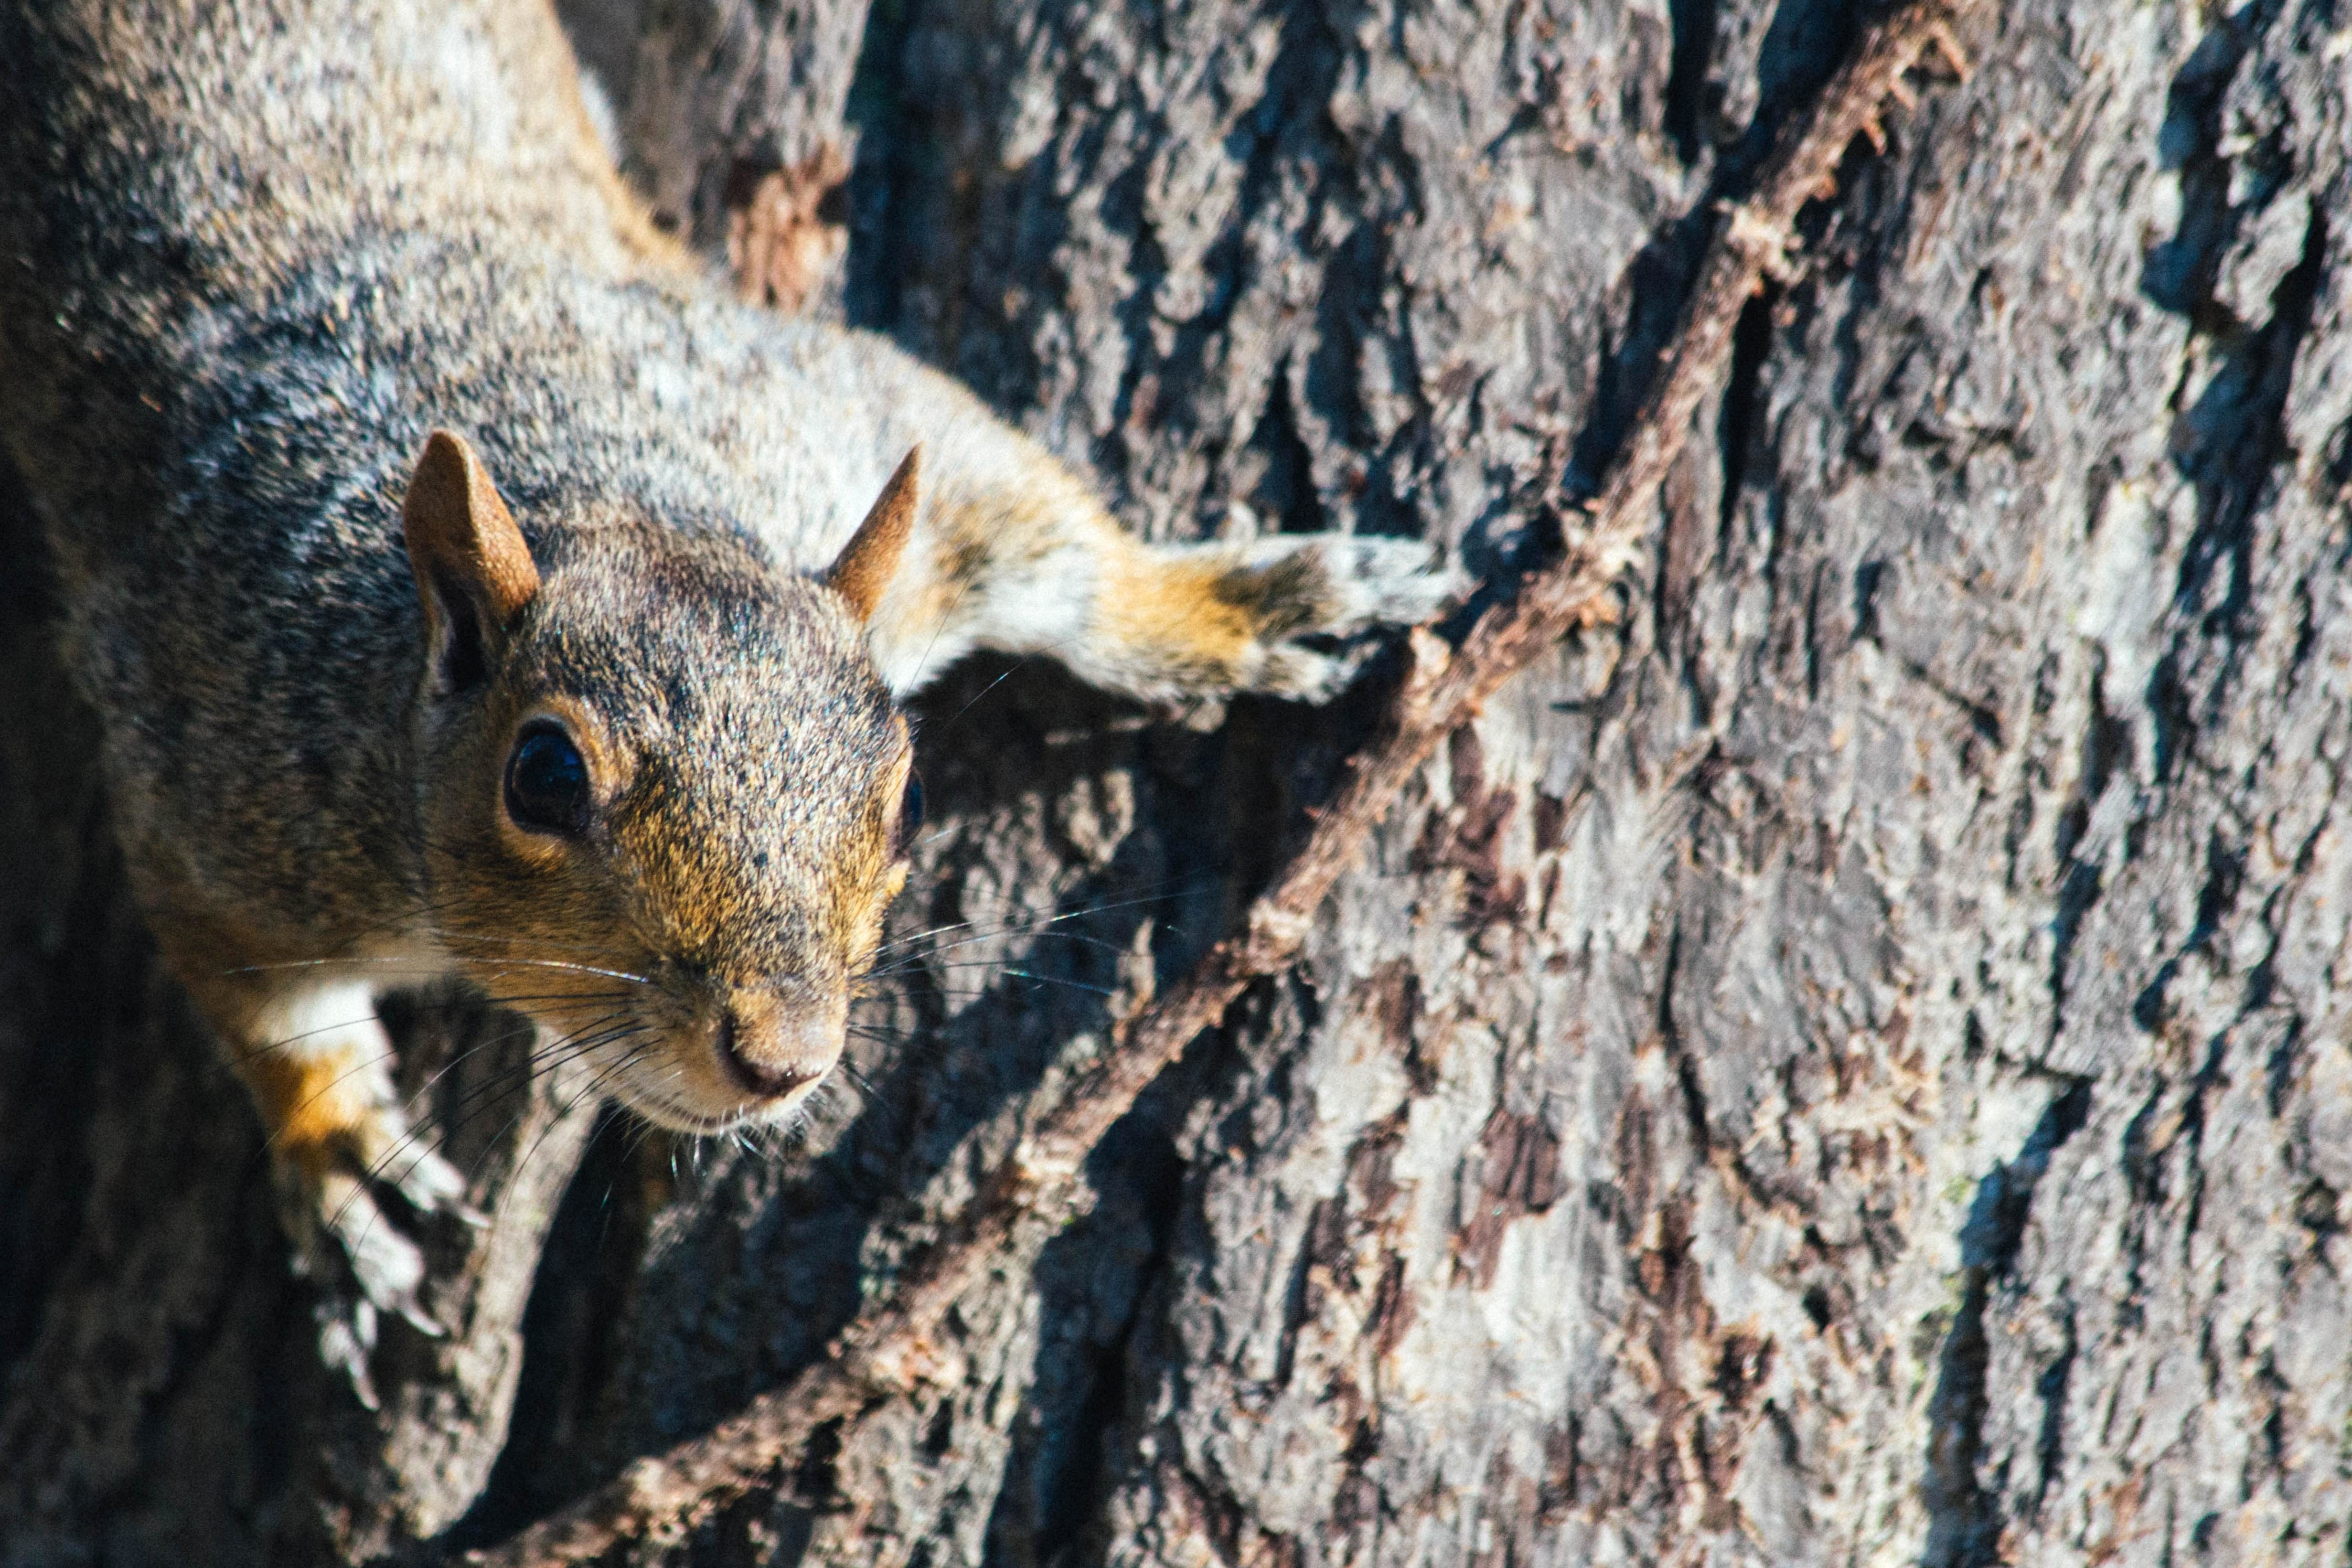 Squirrel free images, public domain images